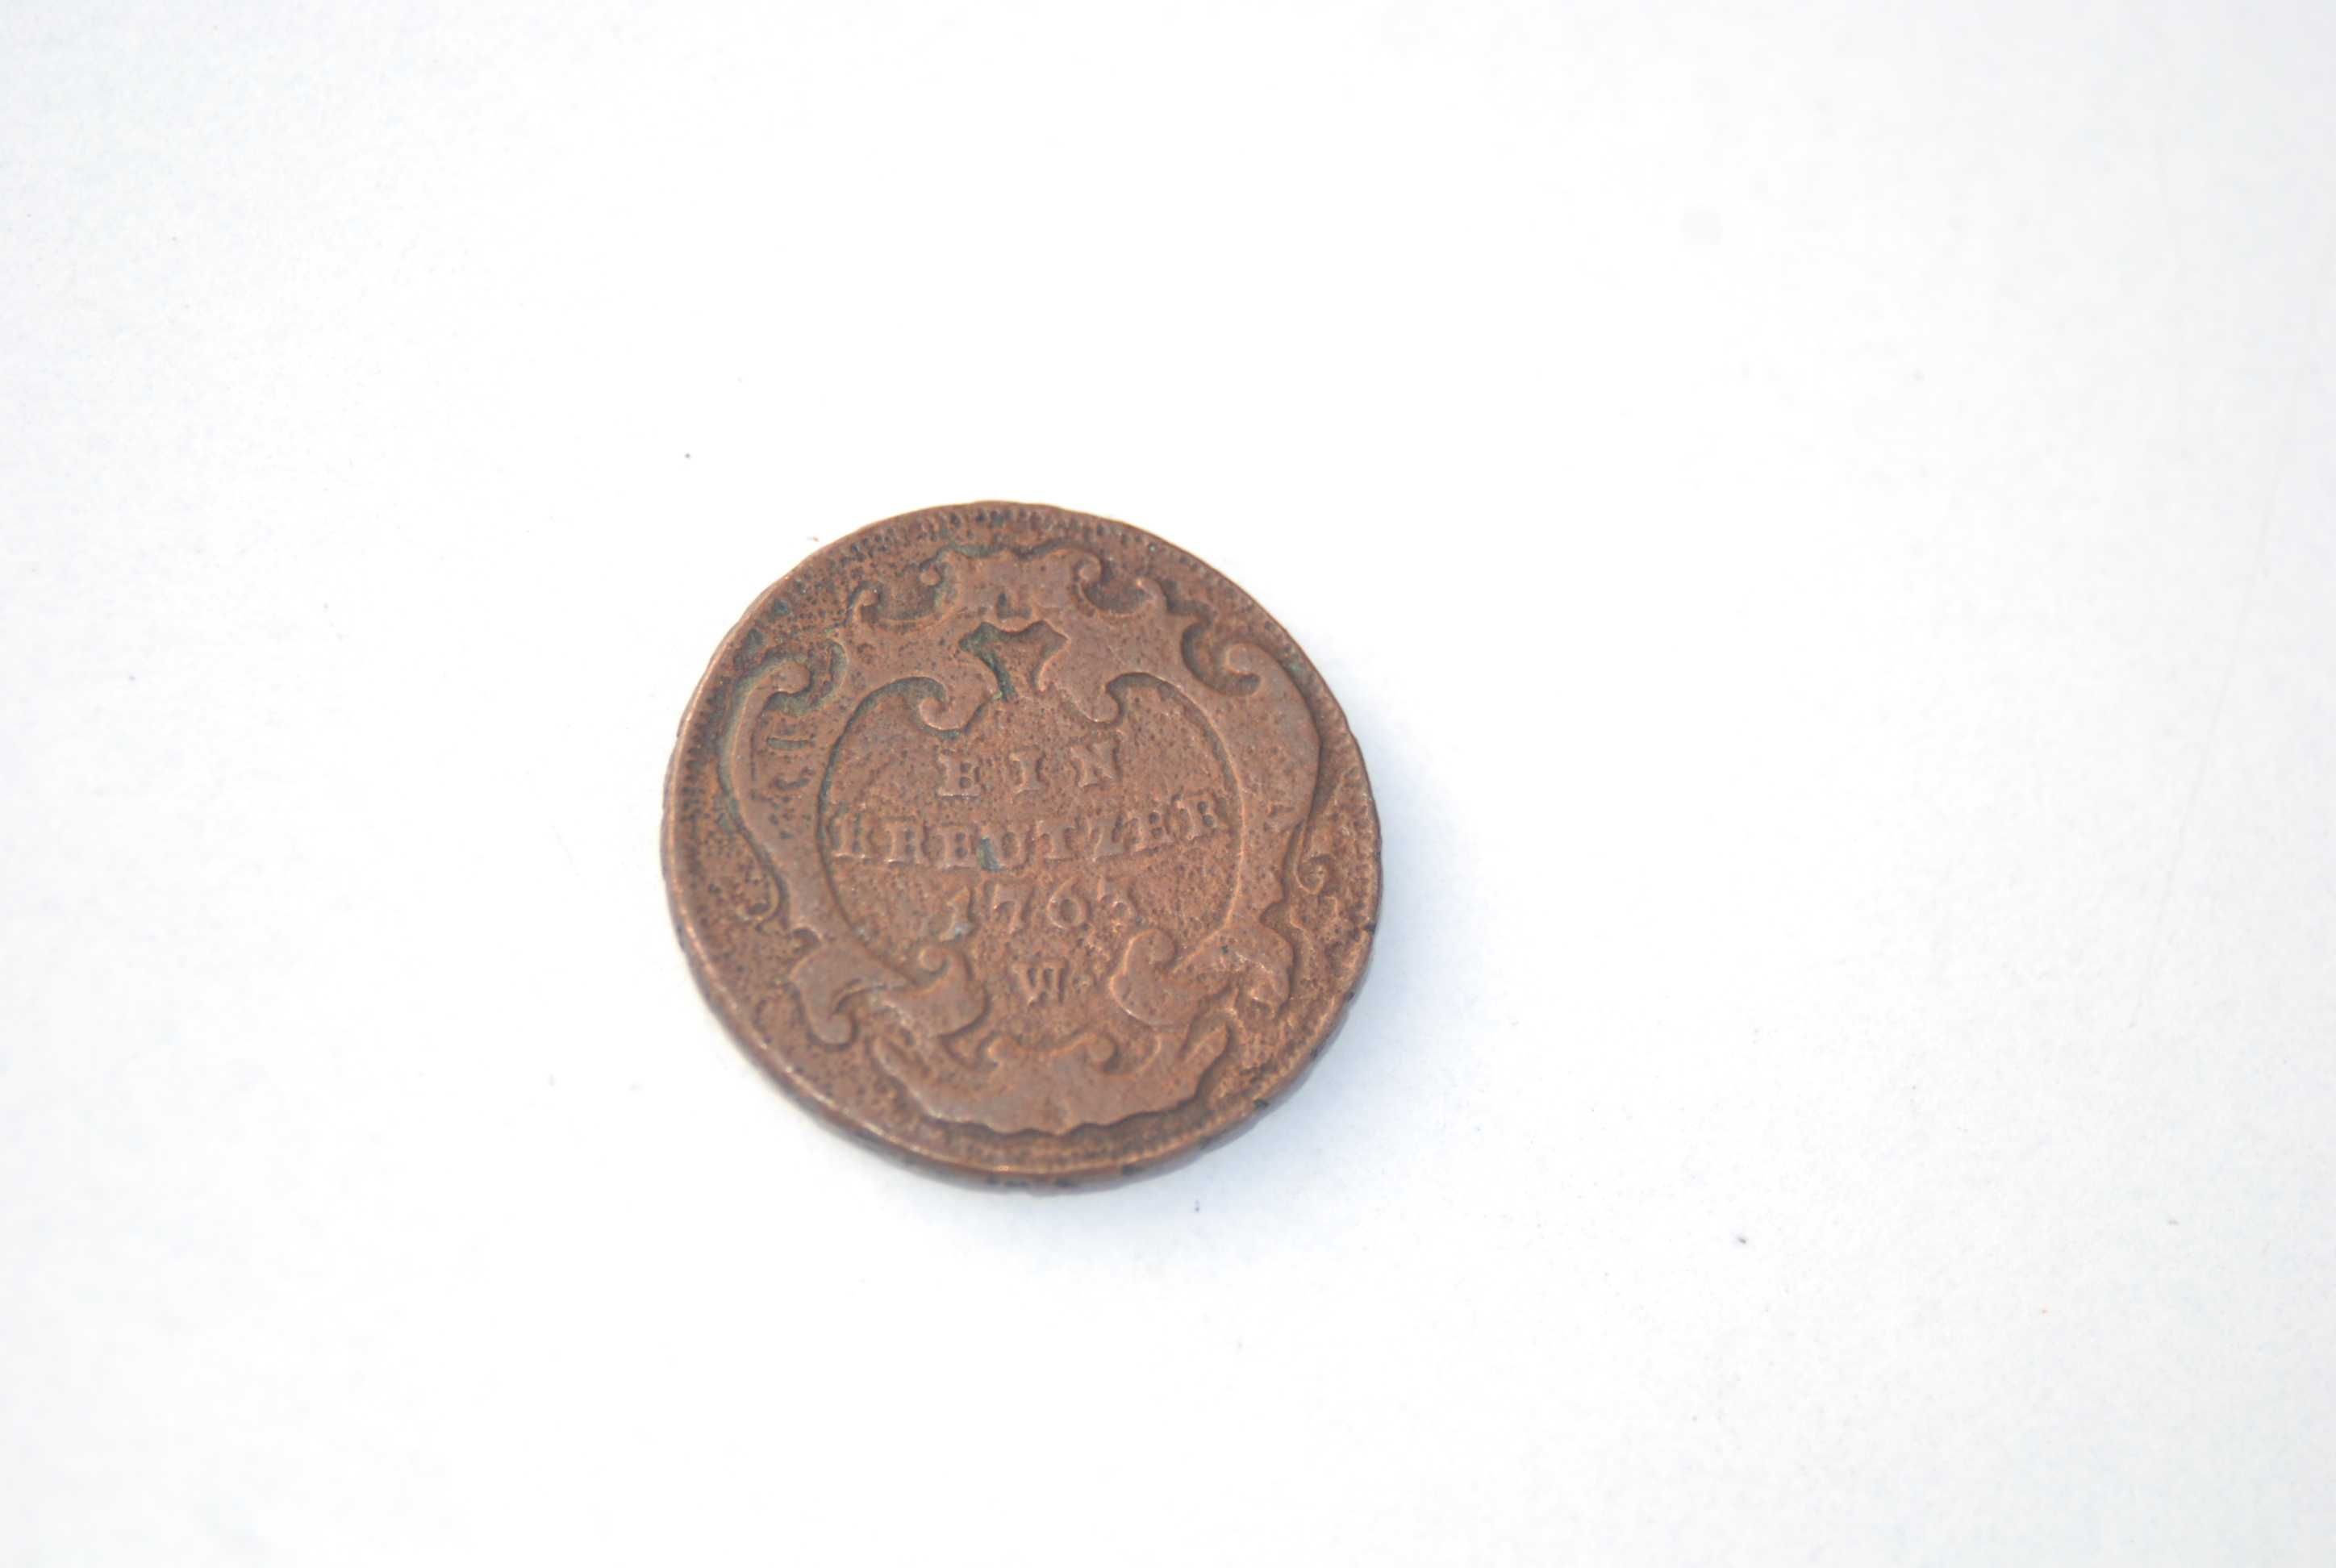 Stara moneta 1 krajcar Austria 1763 unikat antyk kolekcjonerski